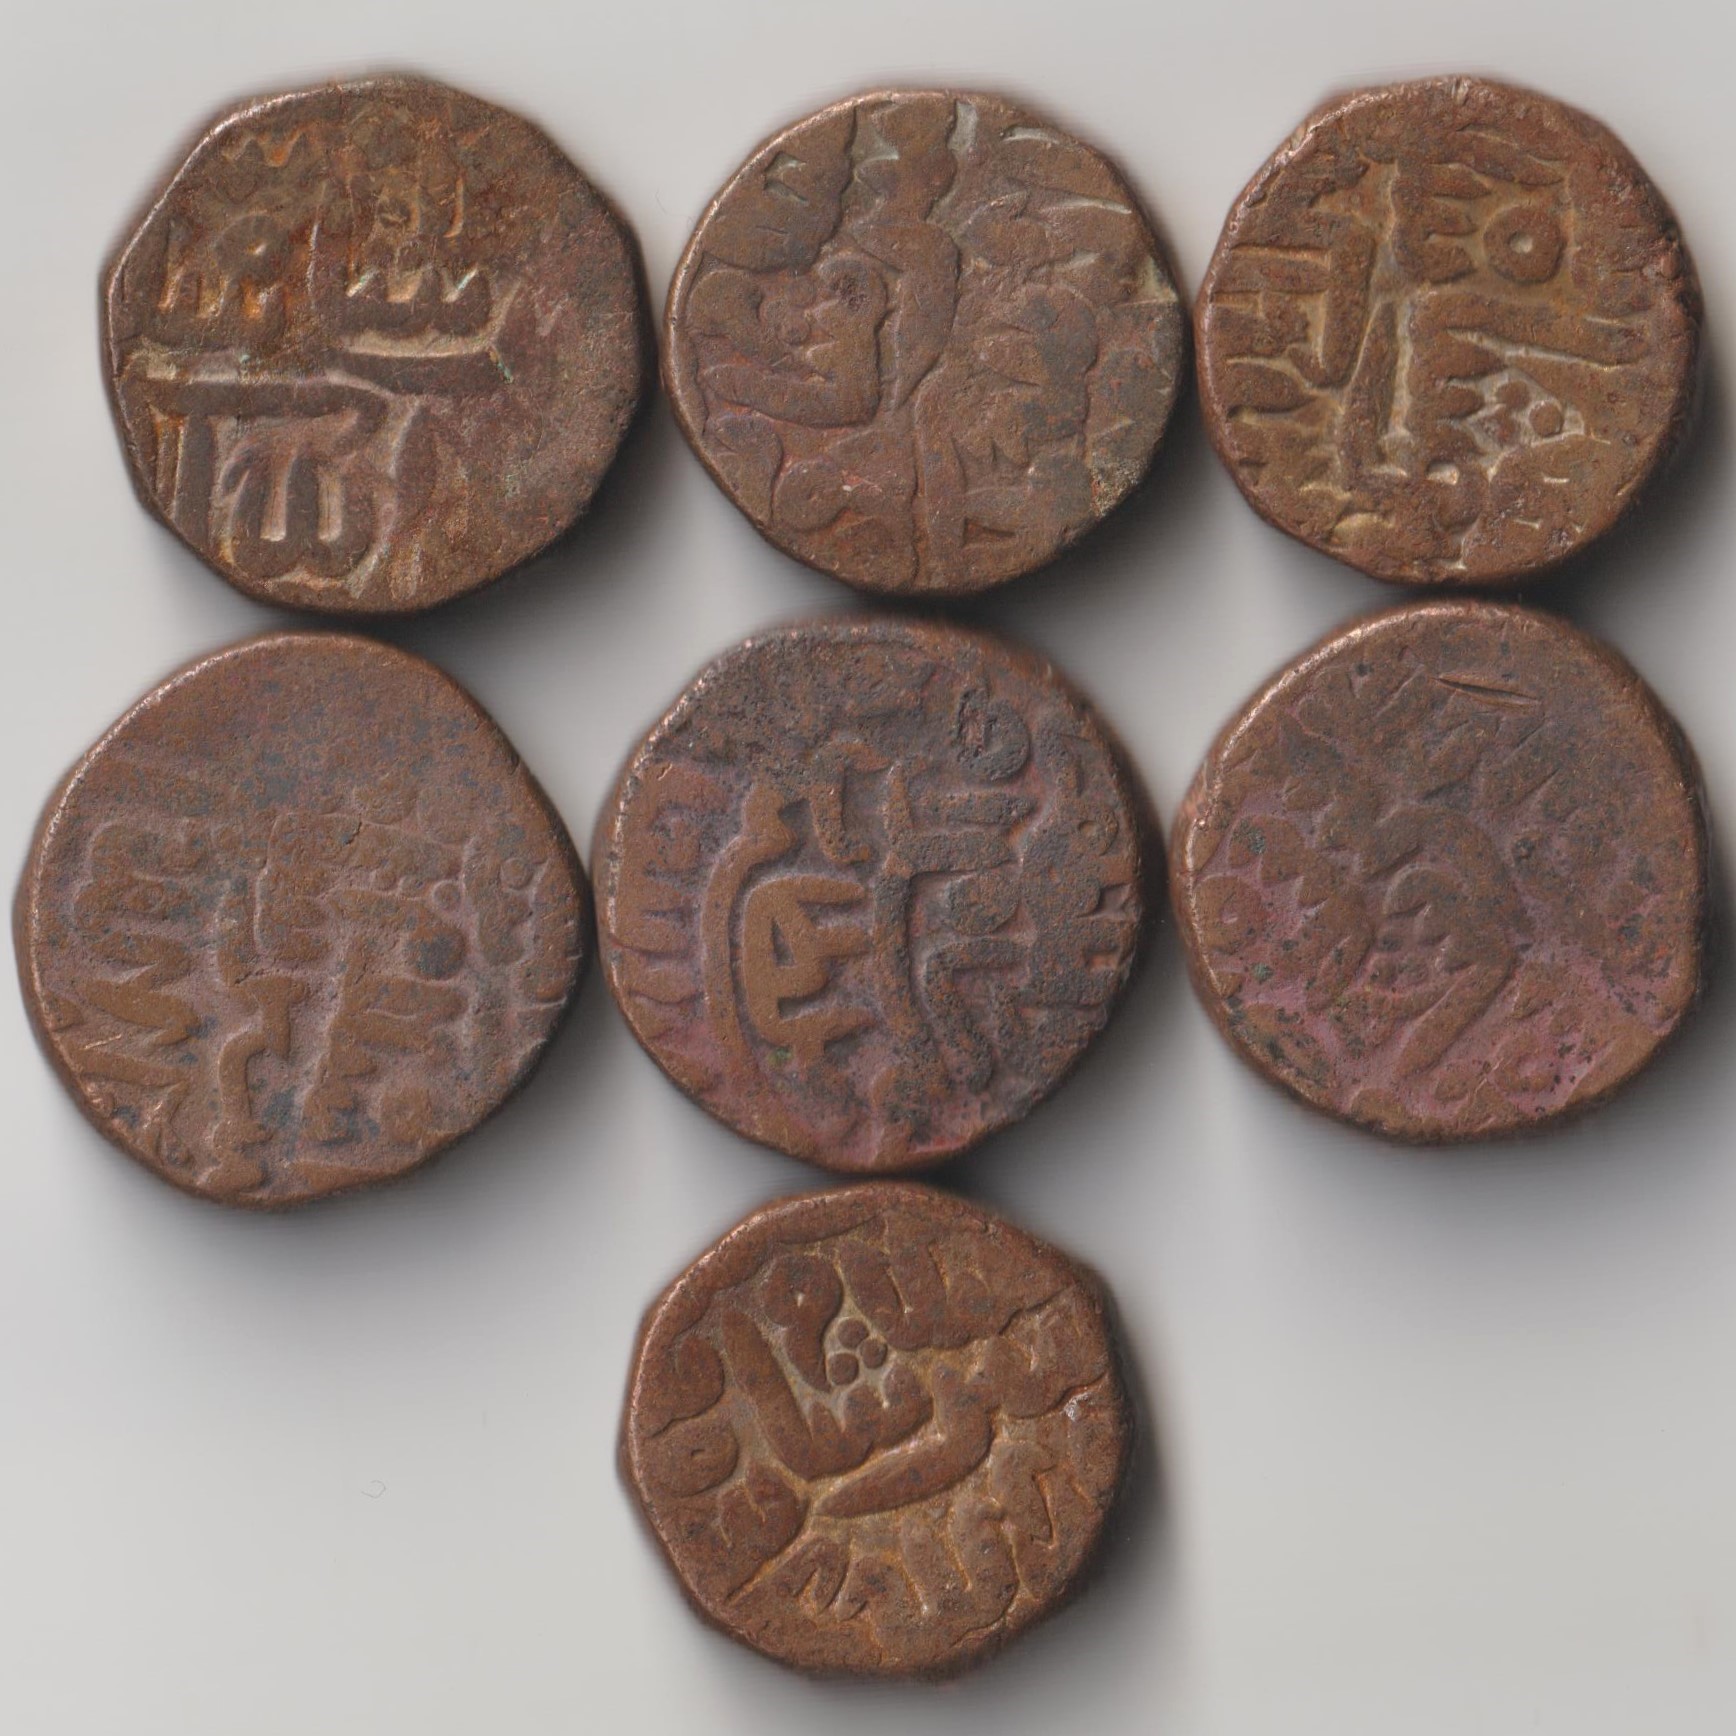 Rare One Paisa Heavy Weight Copper Coin of Sher Shah Suri Delhi Sultanates  Sur Empire Randomly Single Coin Given From Set 